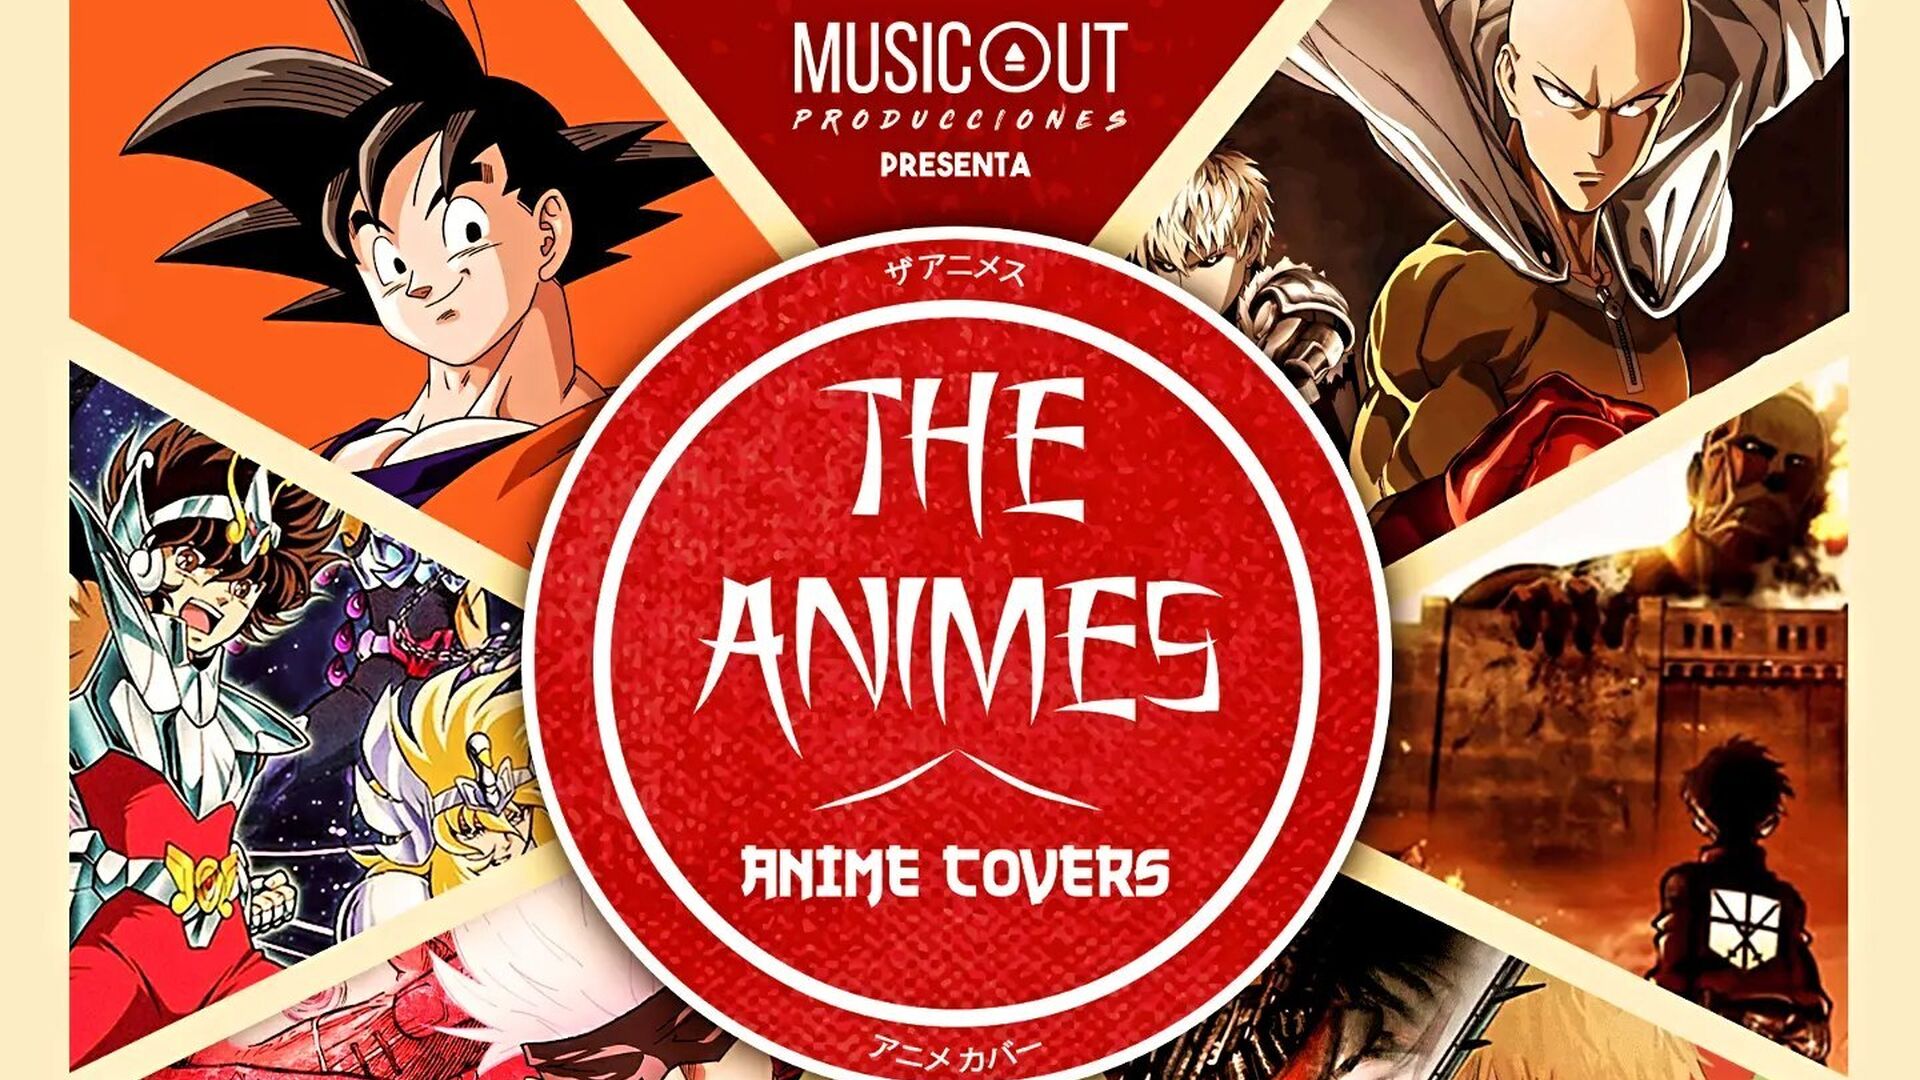 Anime covers